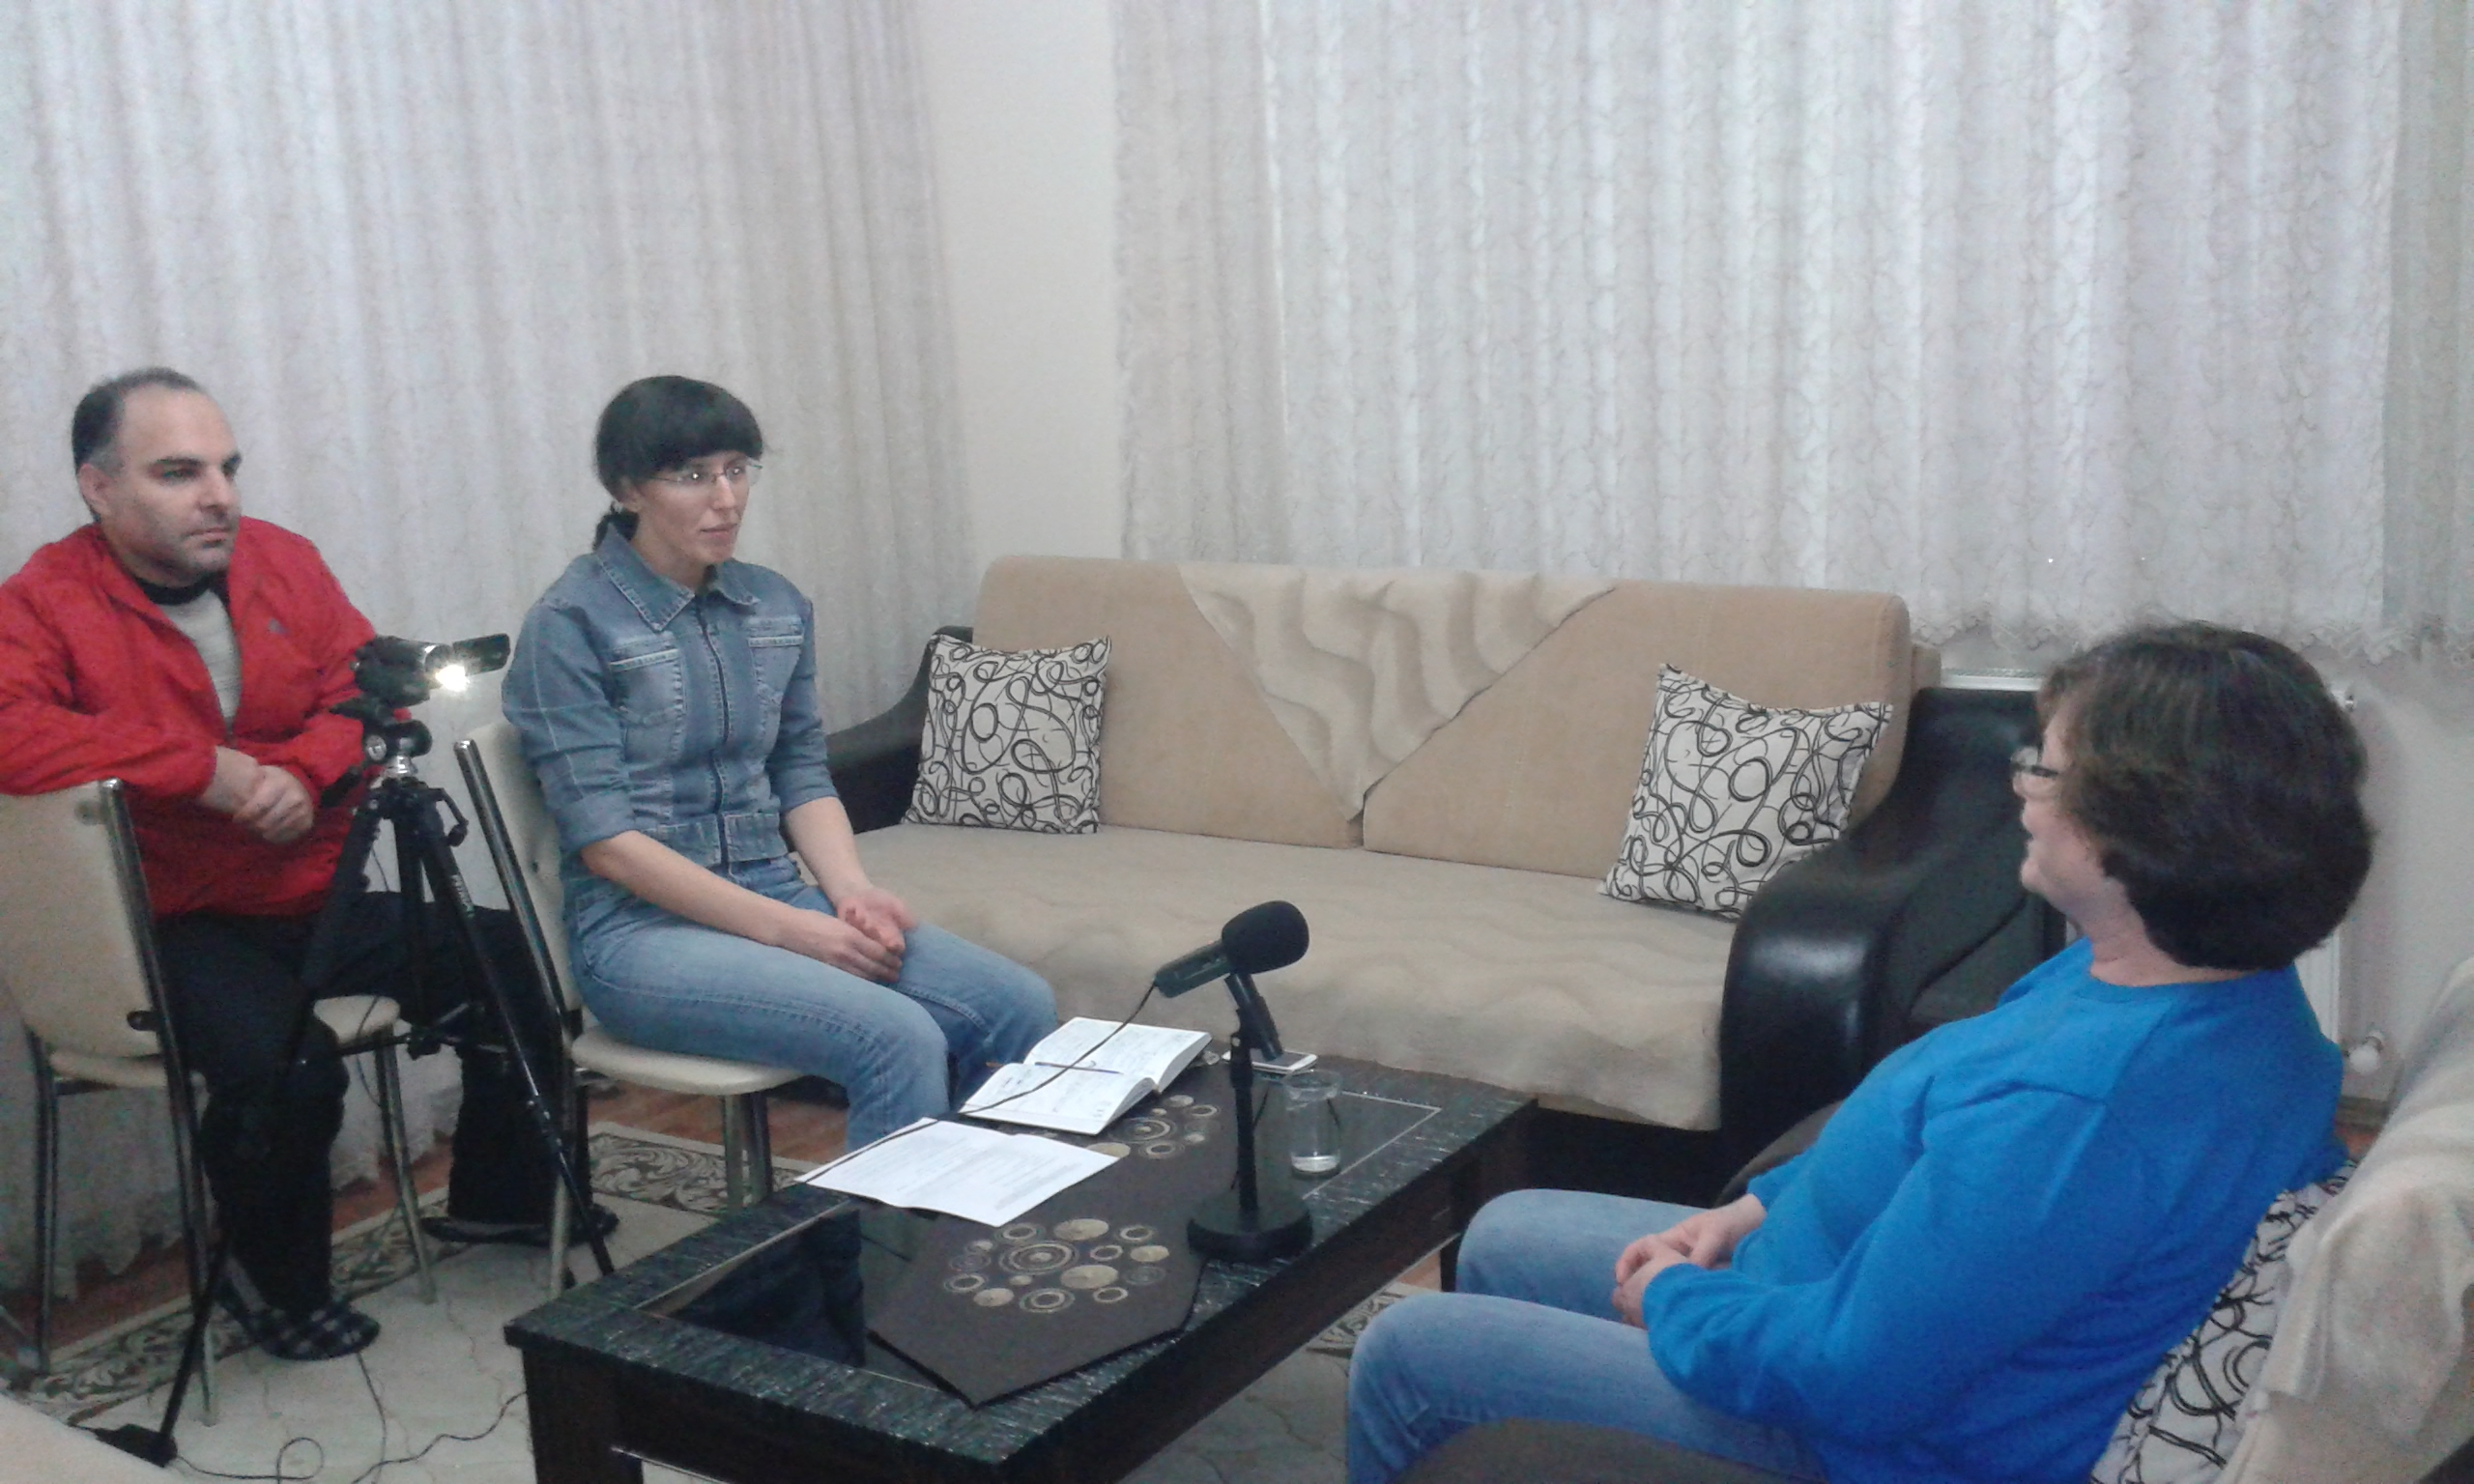 Vildane Dinç (Bulgarian passport Alieva, Vildane) and Artum Dinc, conducting a video interview with Ürküş Akarsu (Bulgarian passport - Silvia Angelova). 30 December 2014, Bursa.